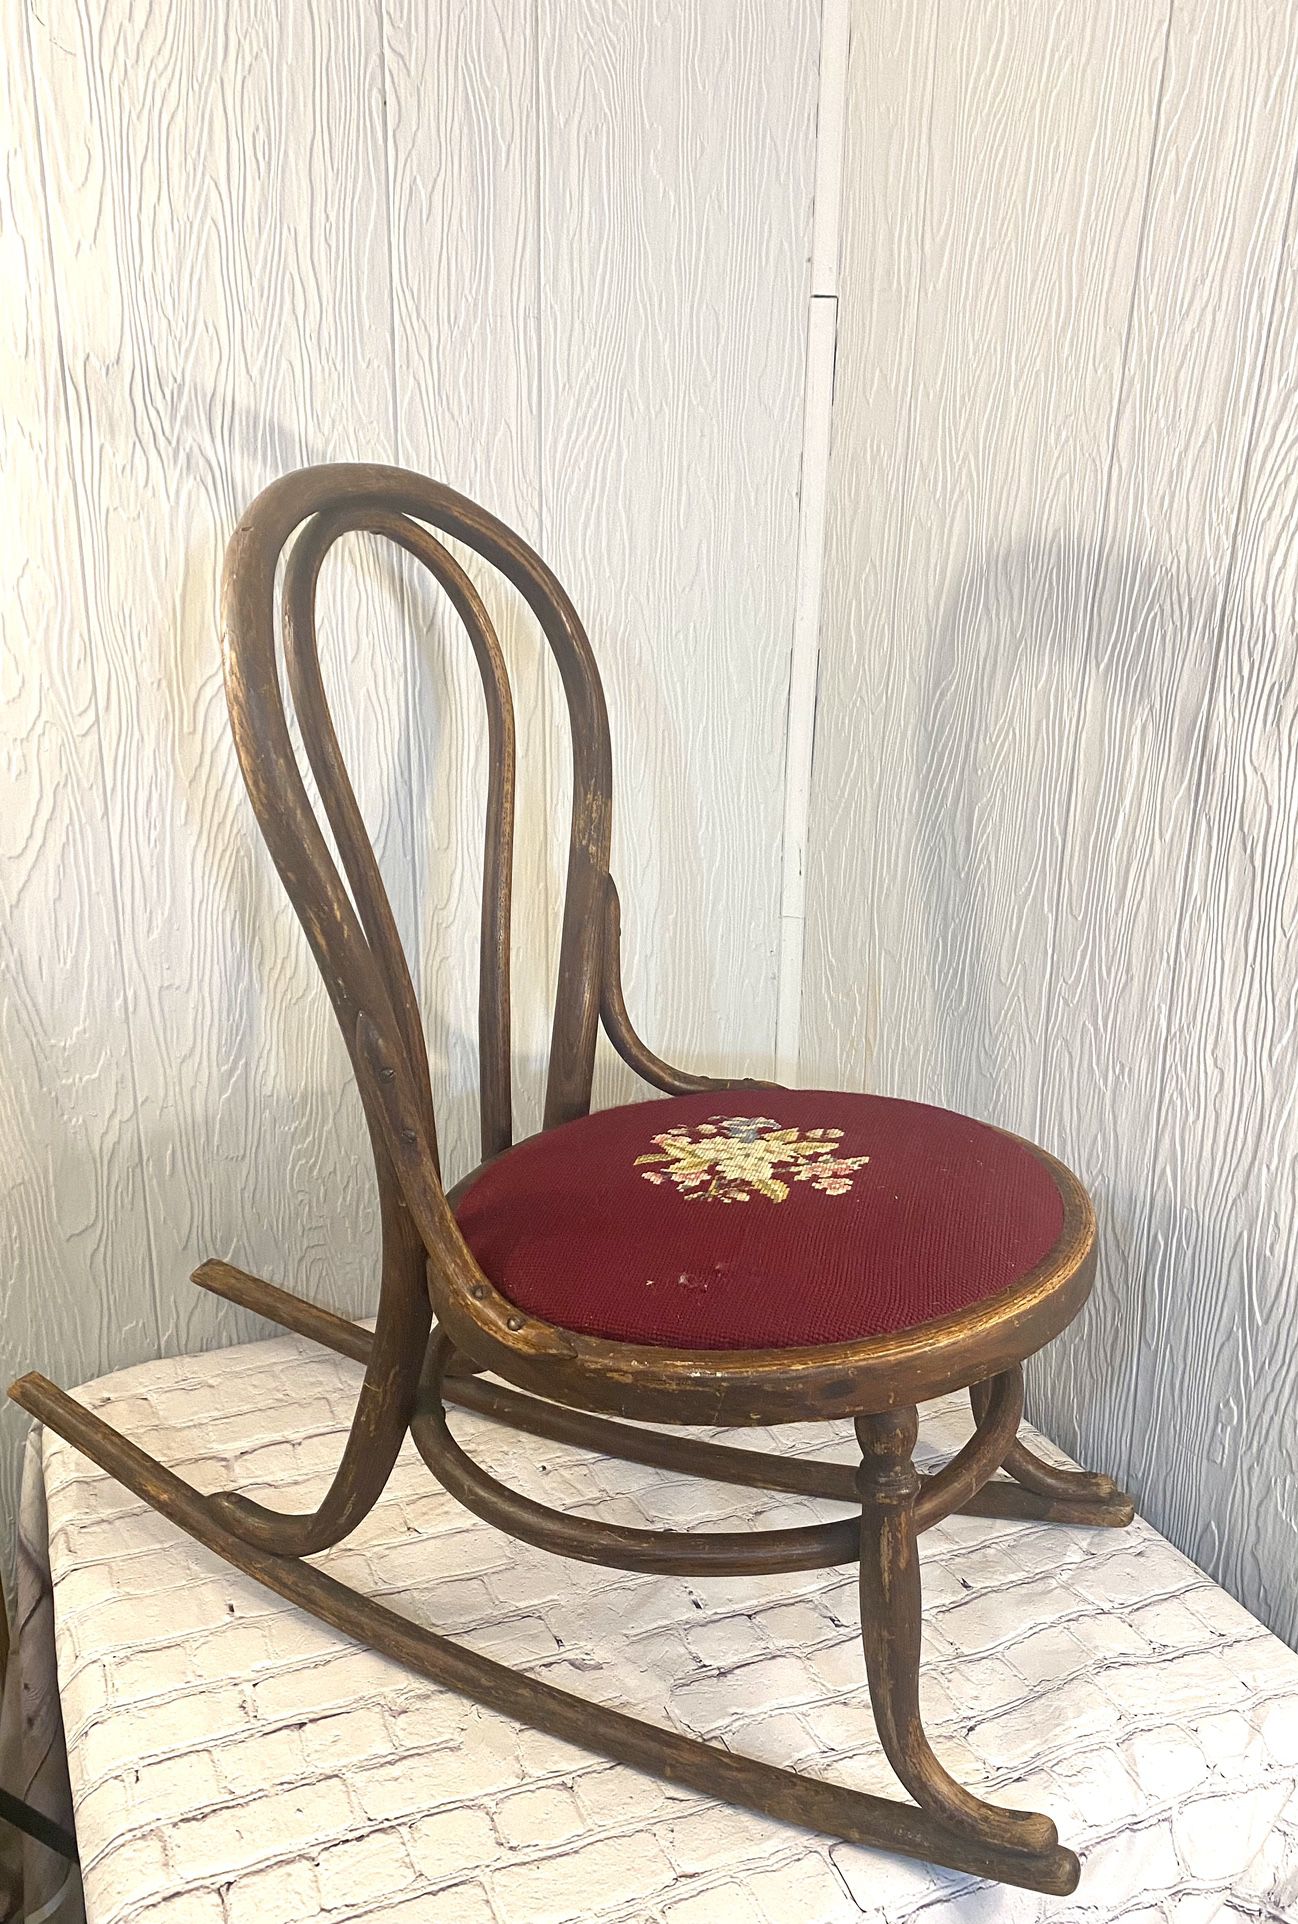 Antique sewing Chair Rocker